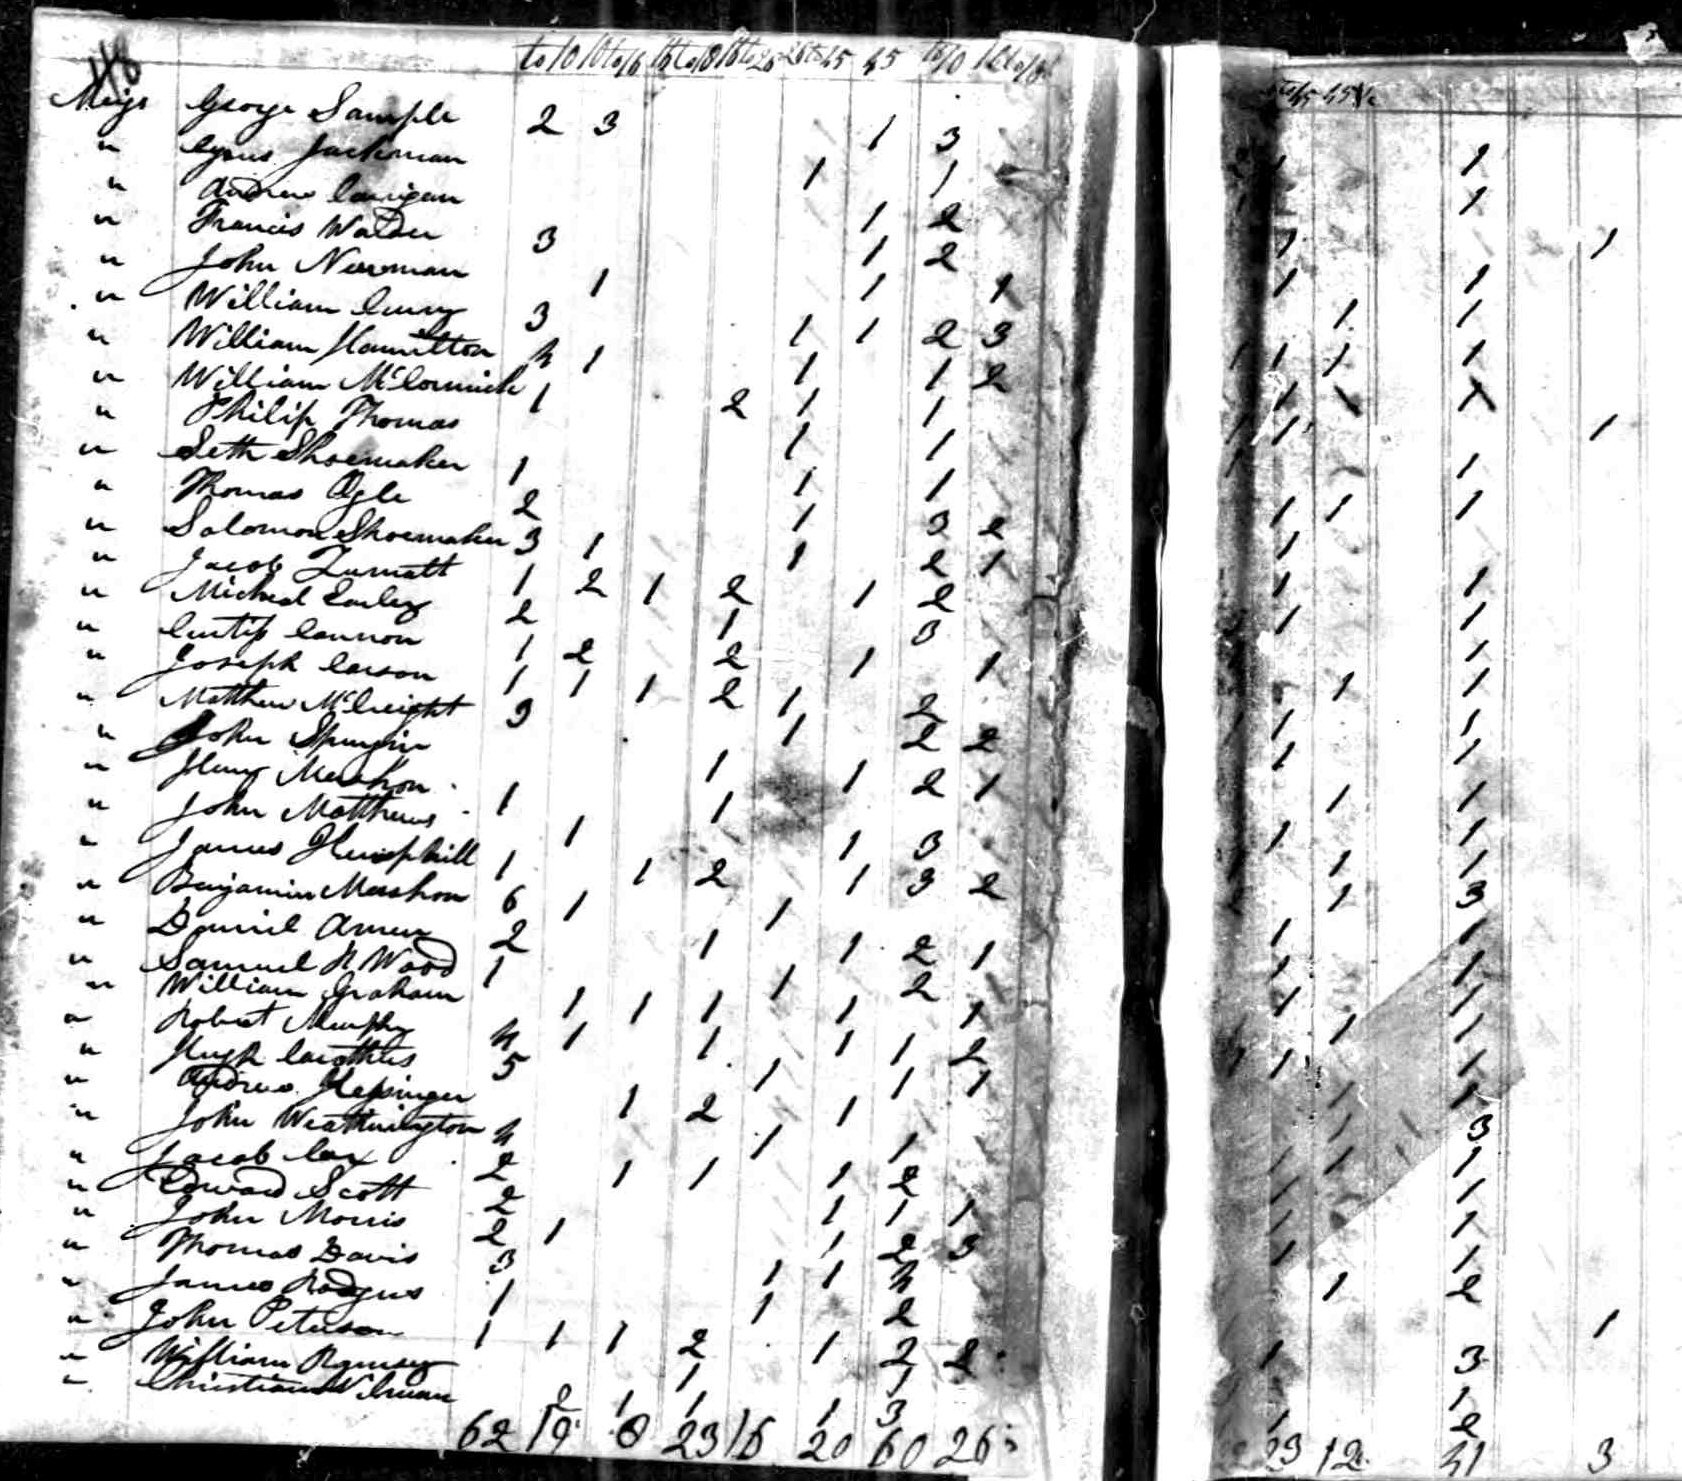  - 00078 - 1820 Census OH Adams Meigs - John Spurgeon